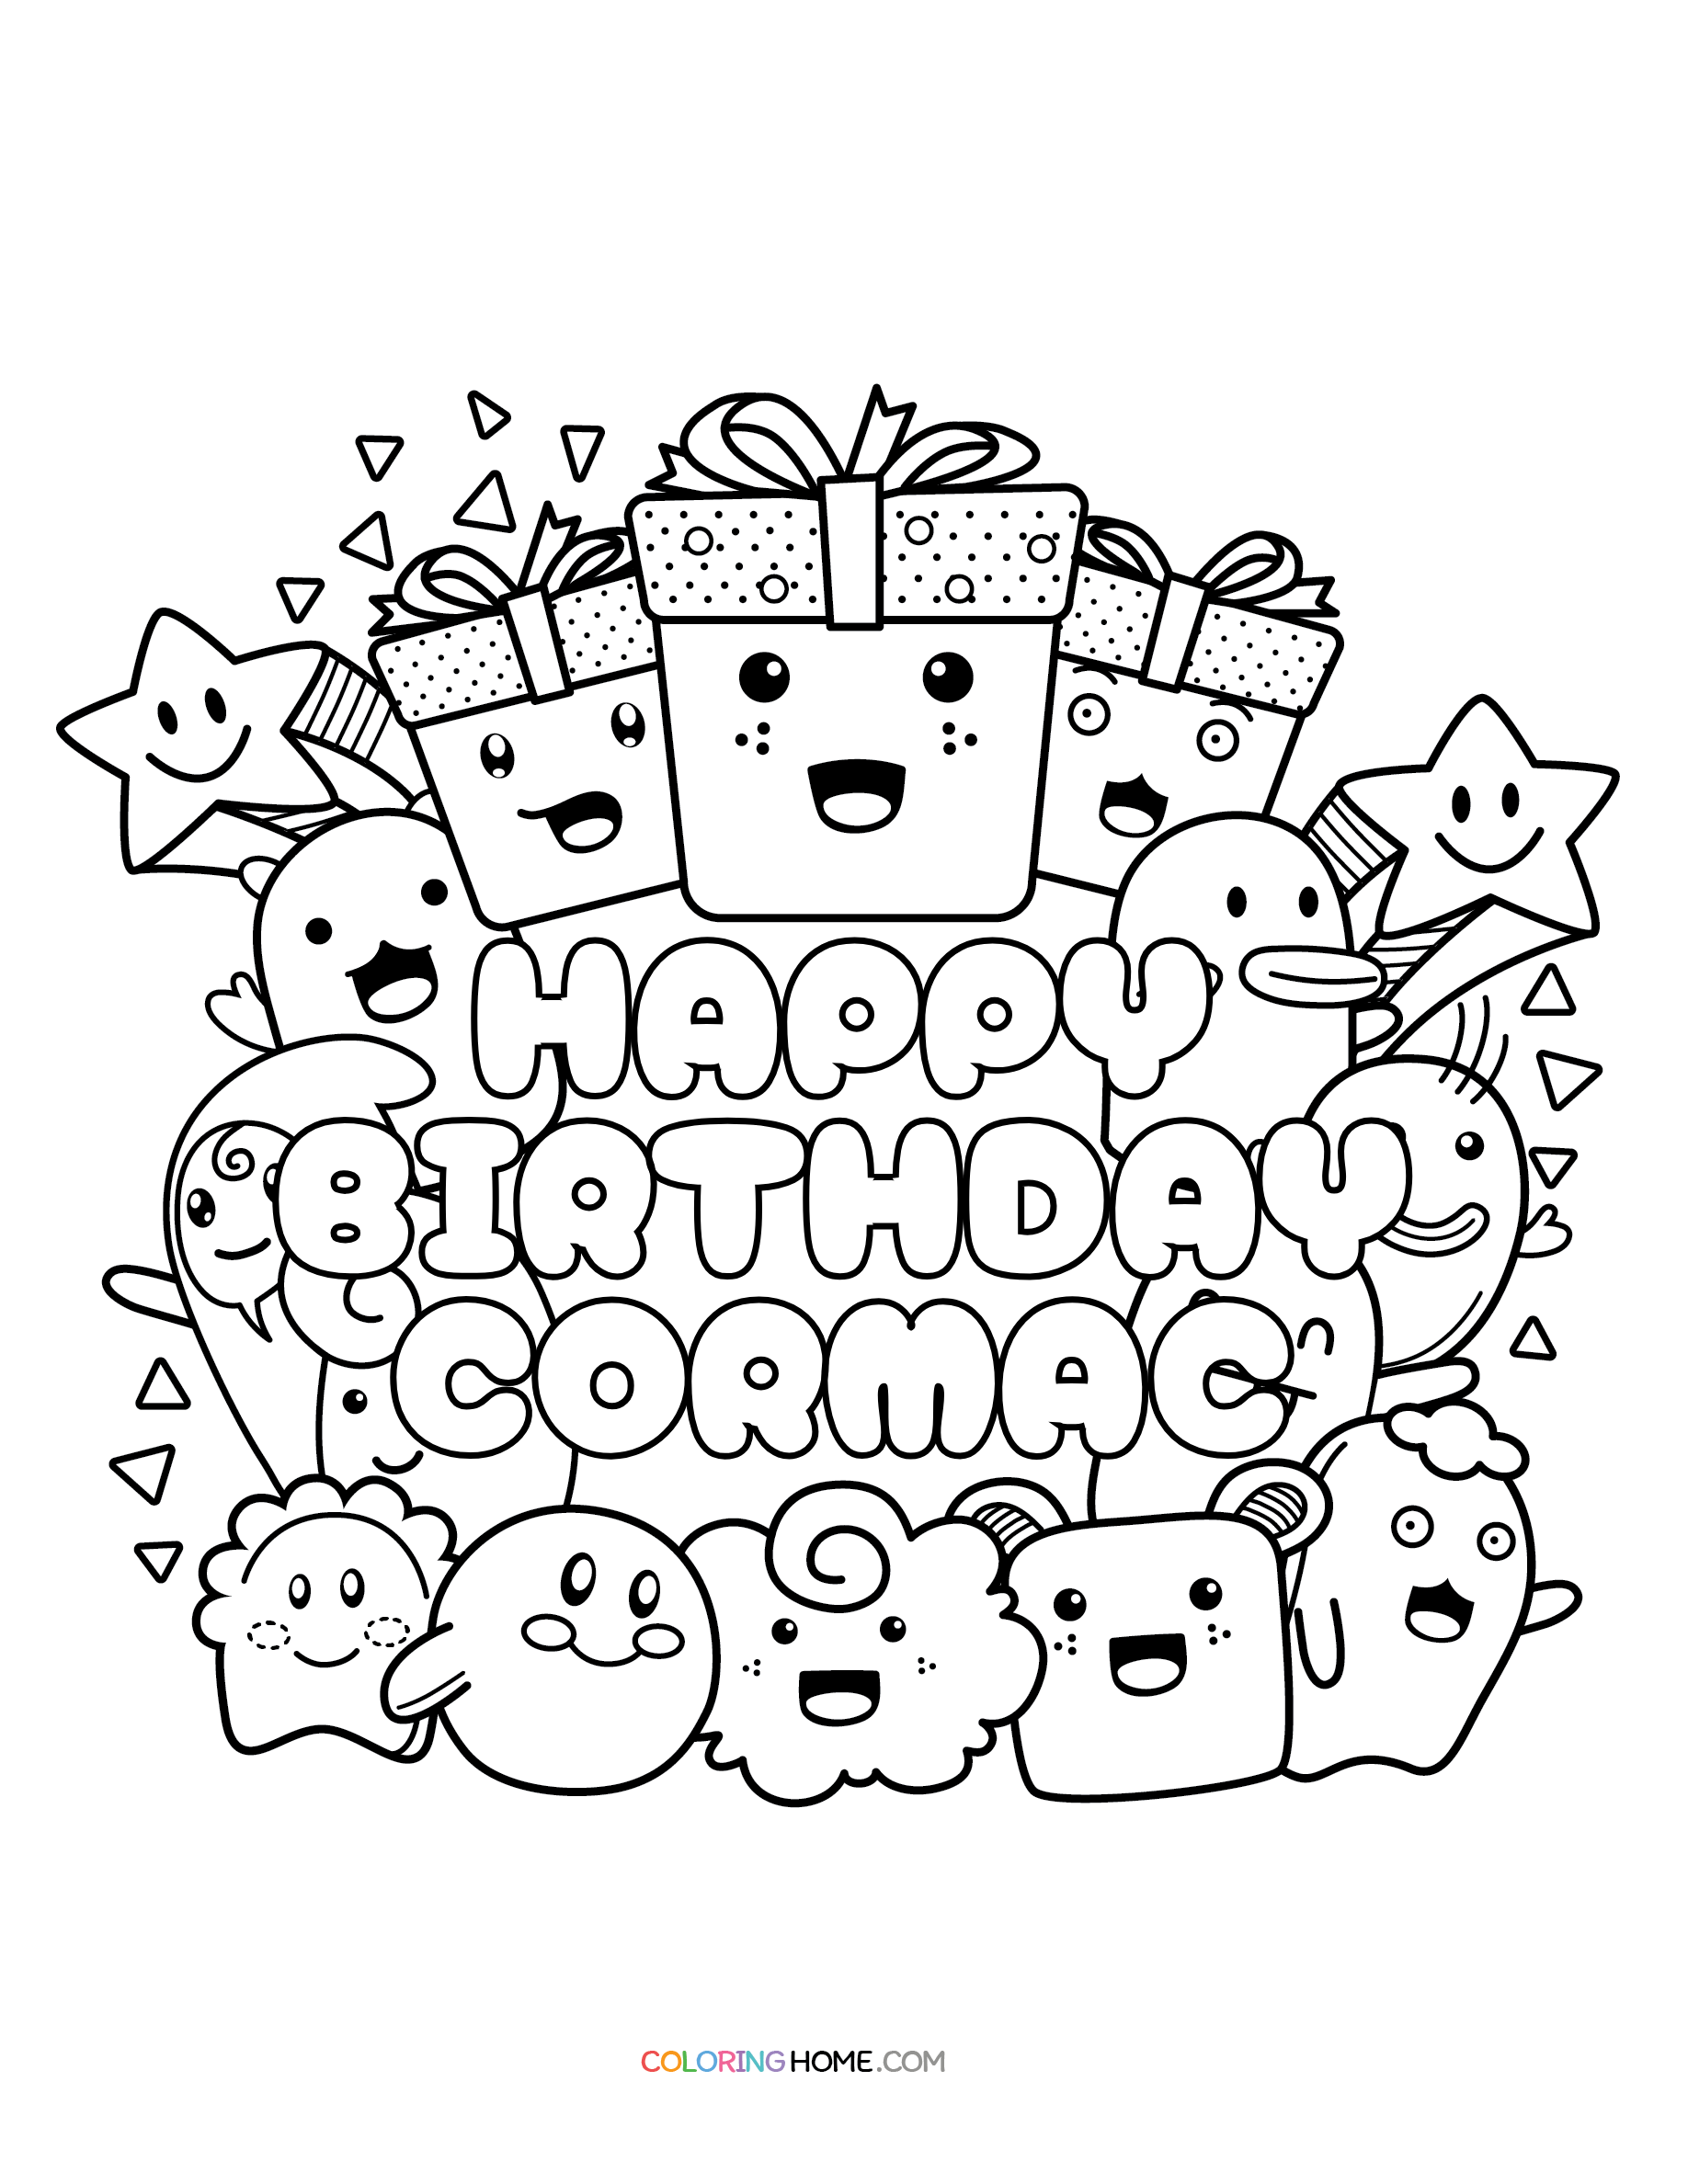 Happy Birthday Cormac coloring page